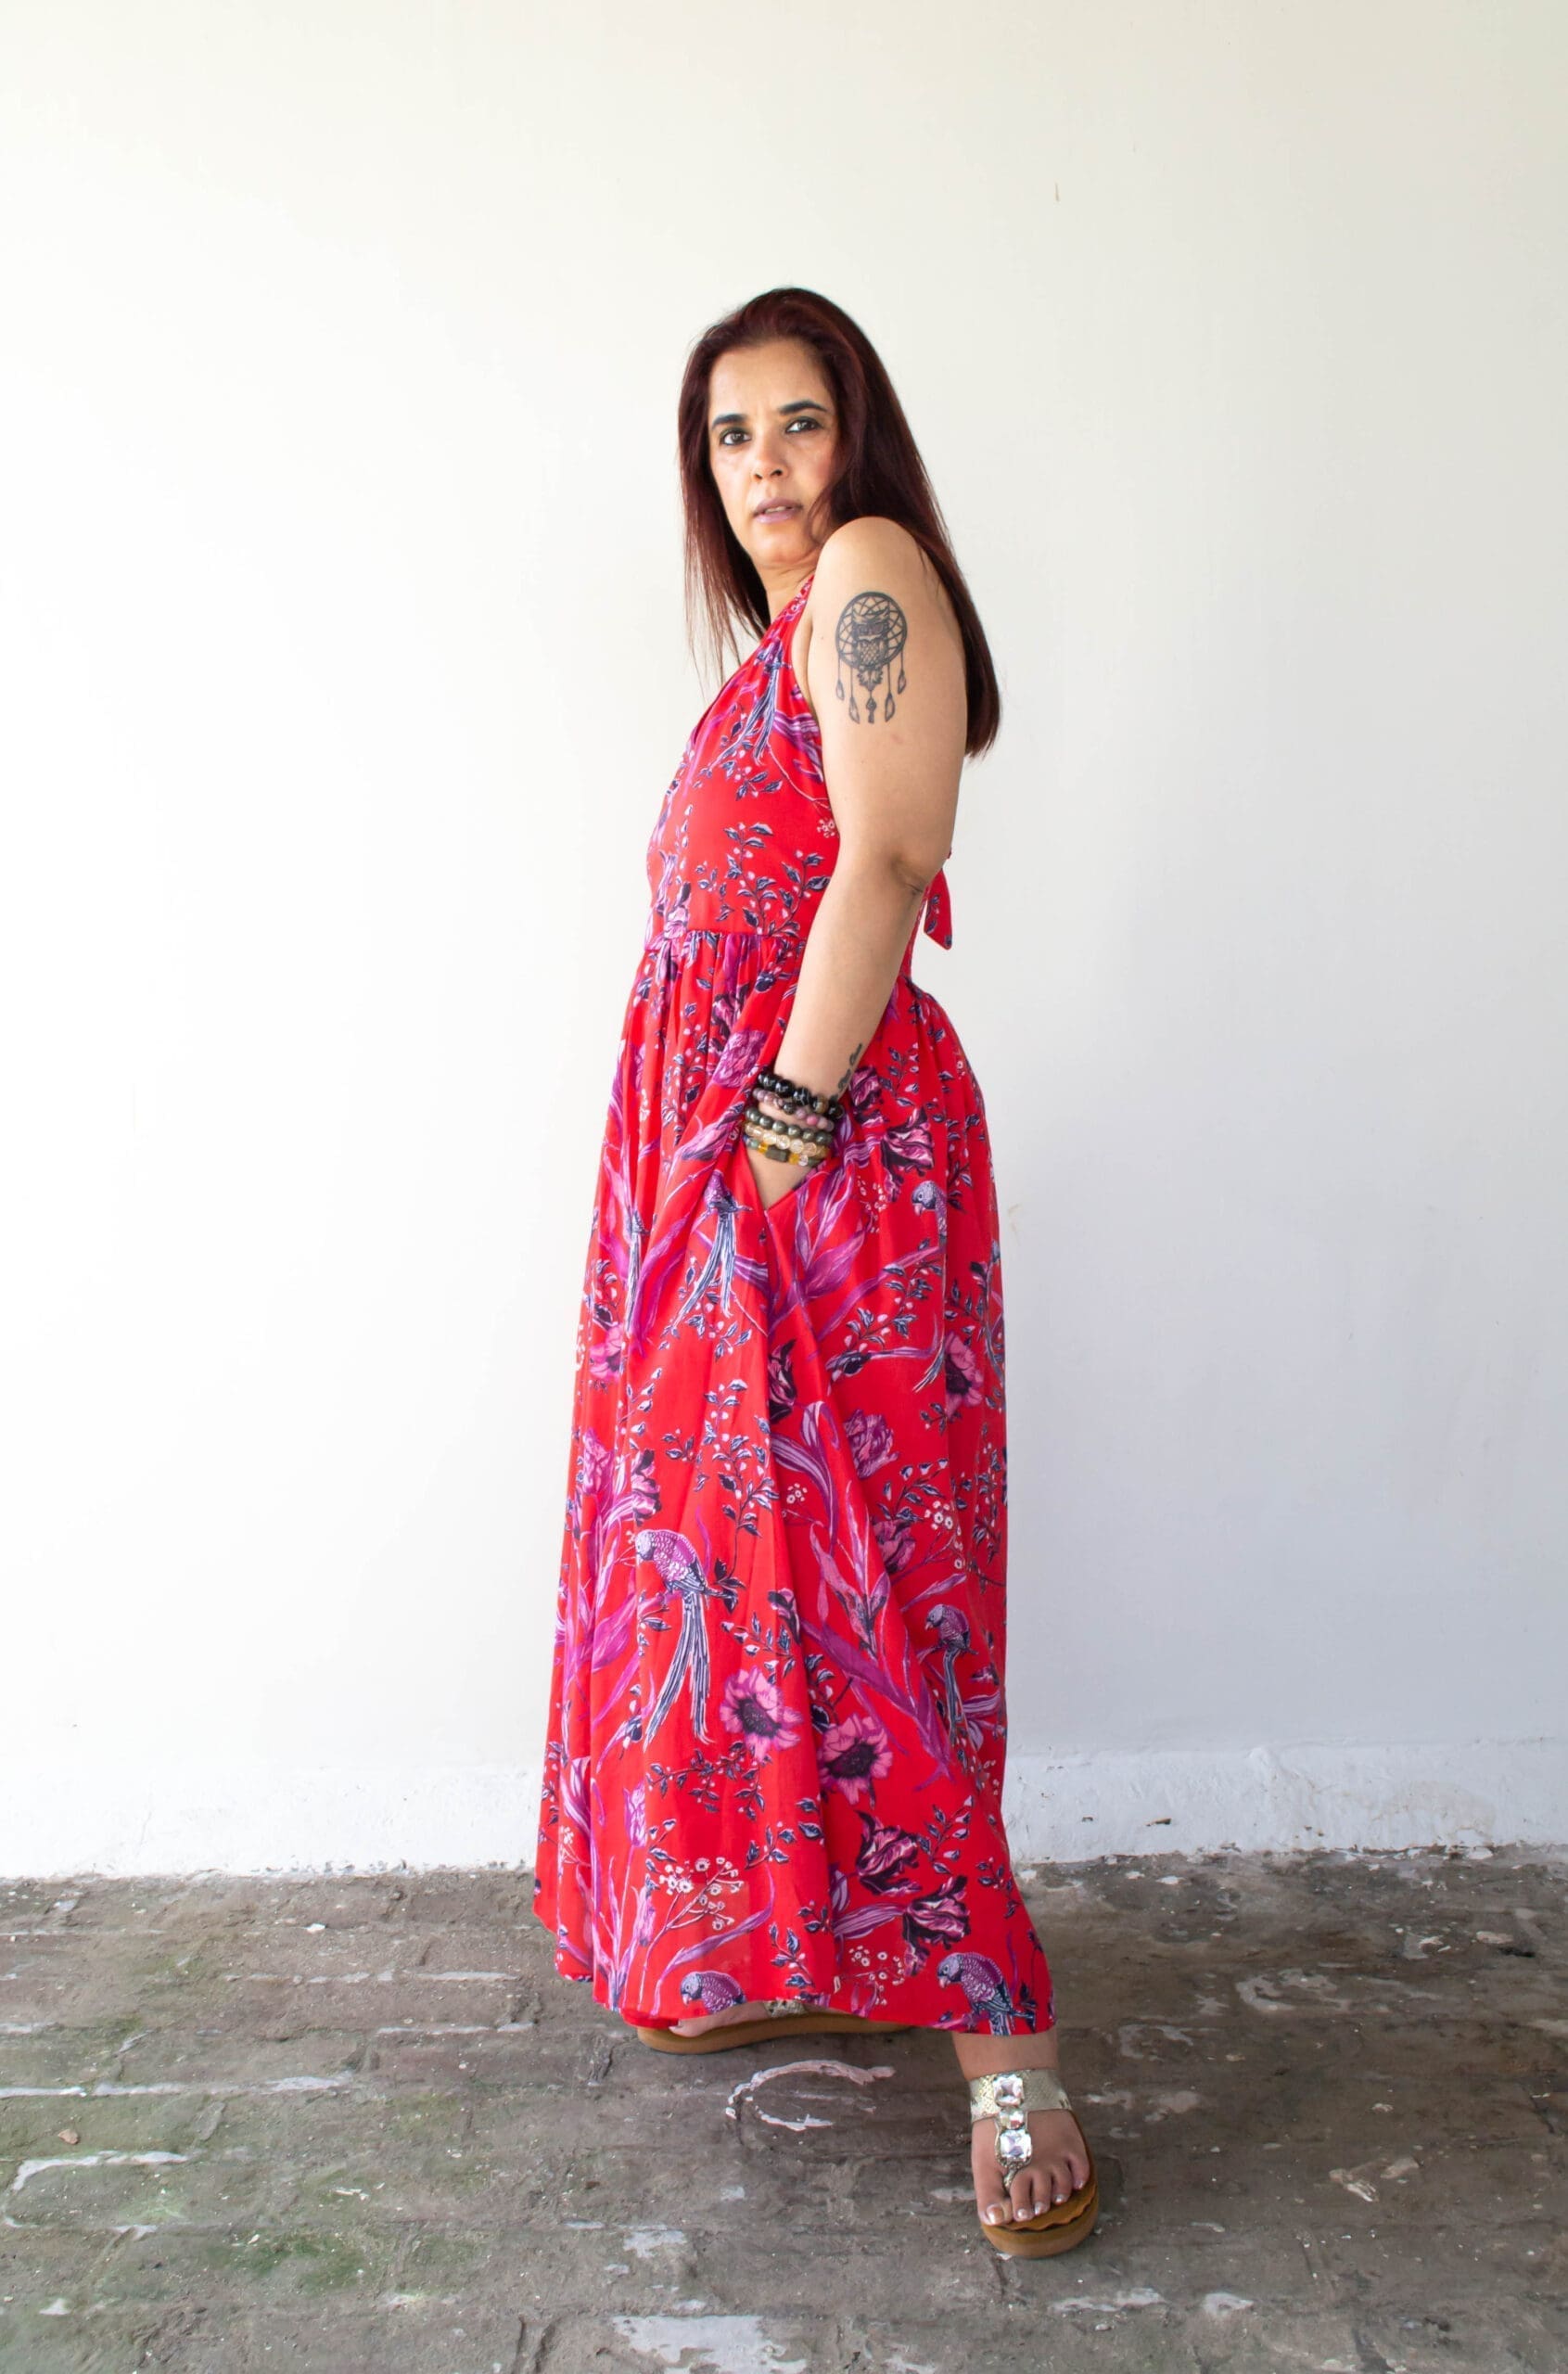 Model in Red Printed Backless Halter Dress posing side